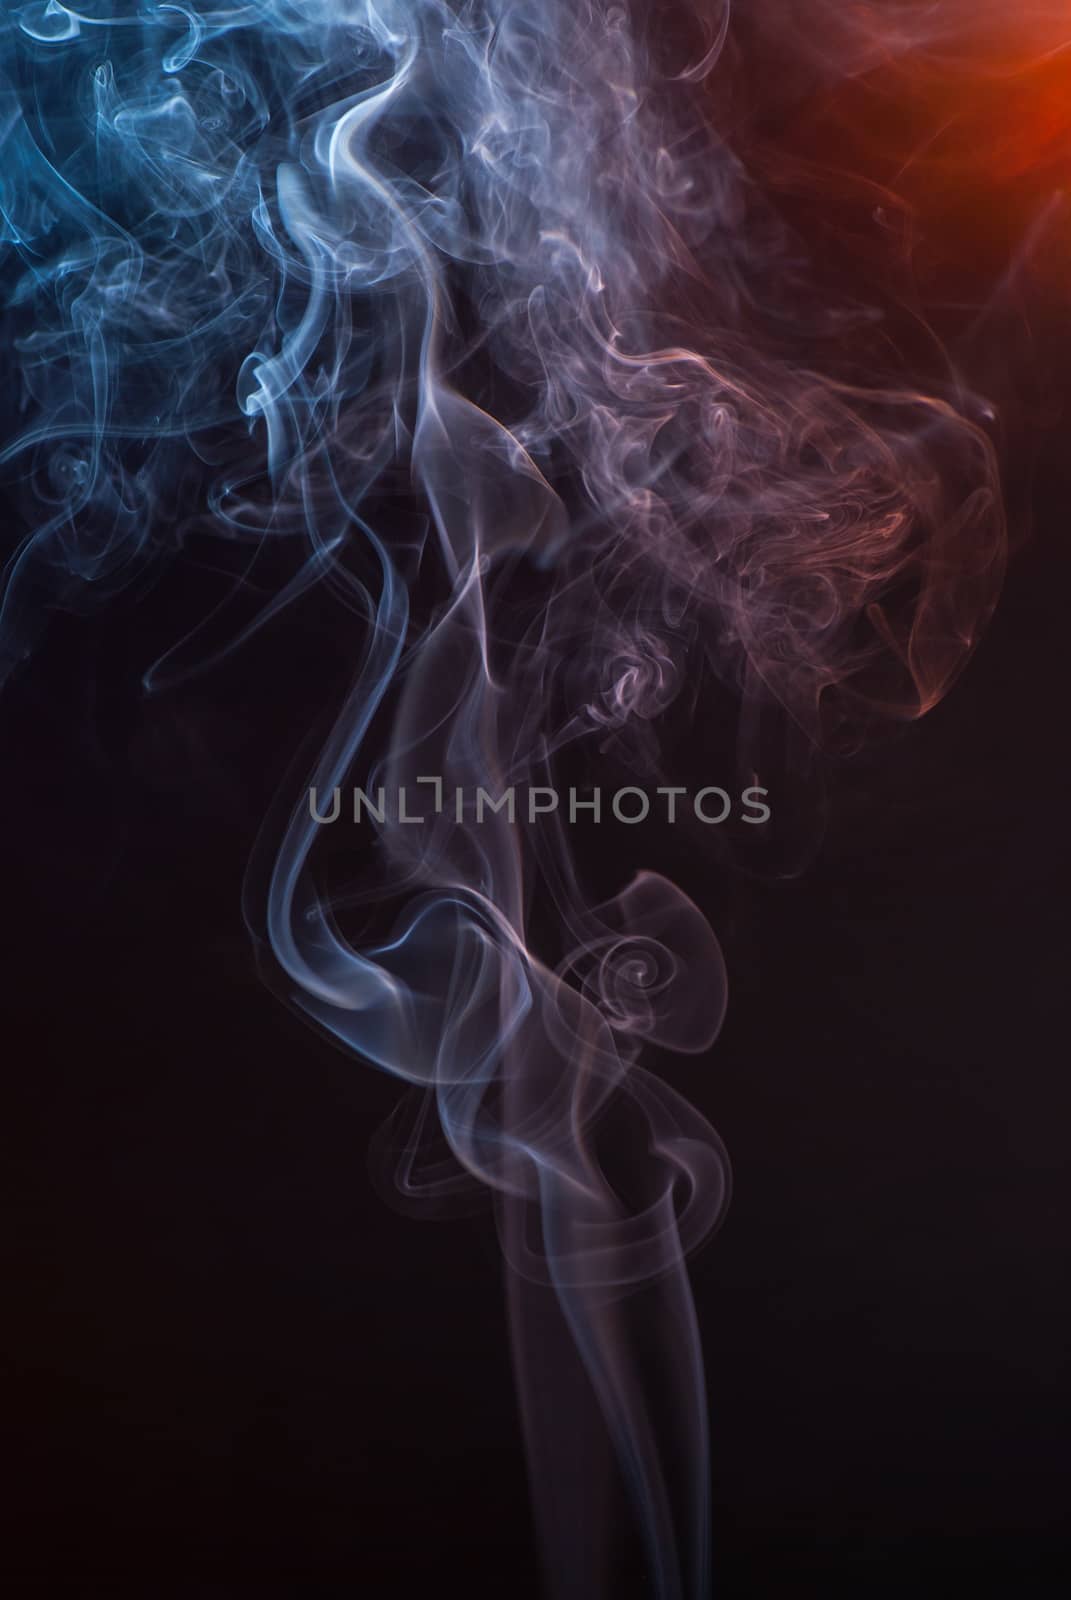 Beautiful smoke on the black background - macro photo.